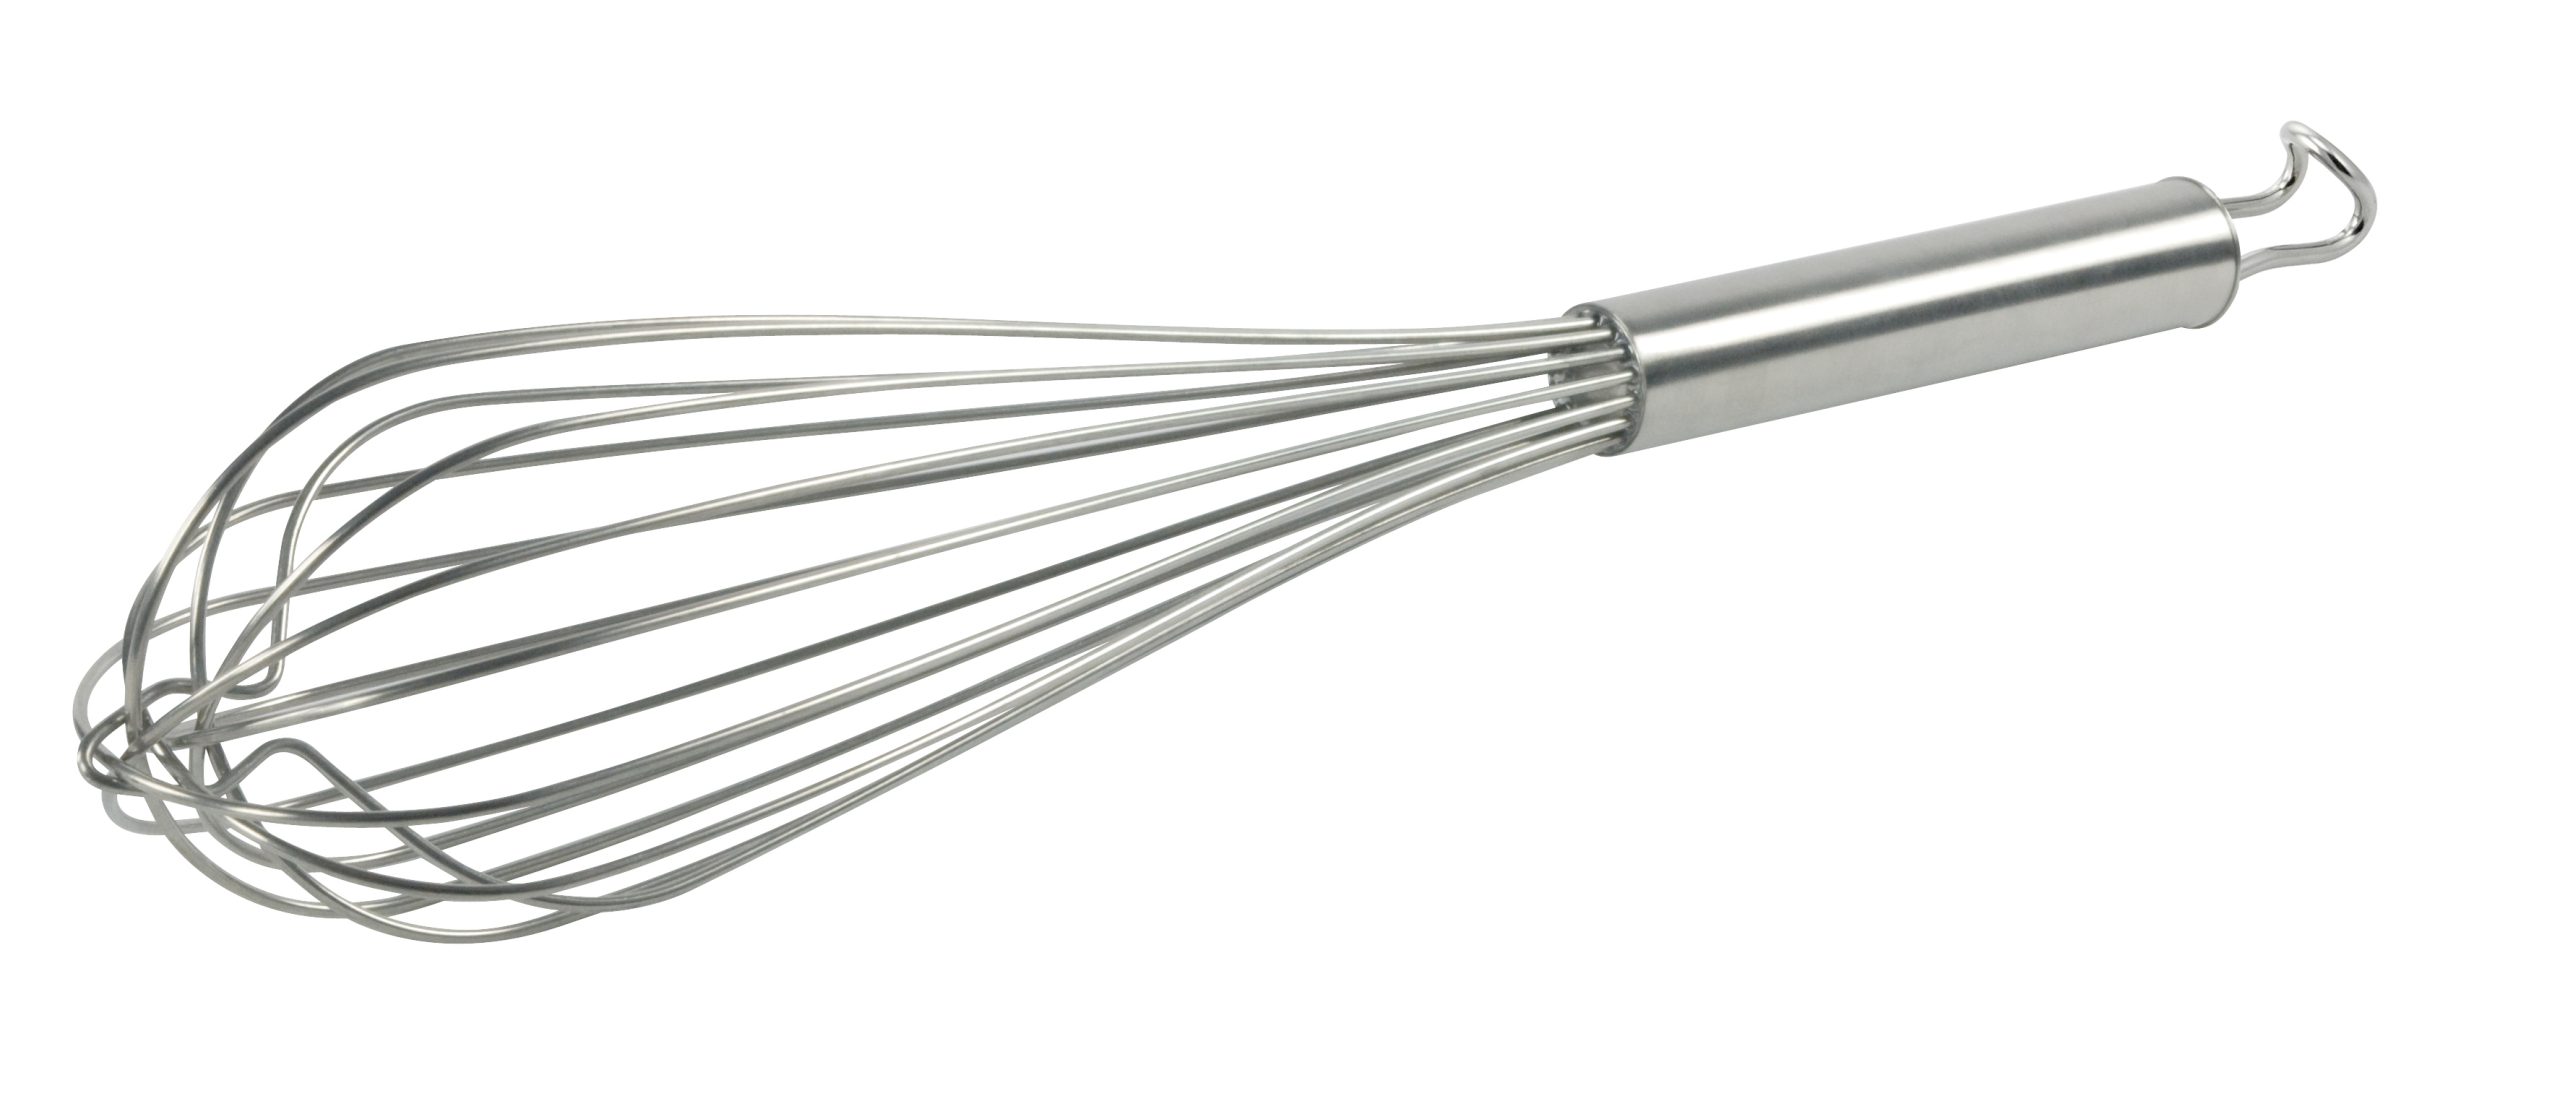 Professional Kitchen whisk 8 wires / 40CM - Stainless steel 18/10 ILSA